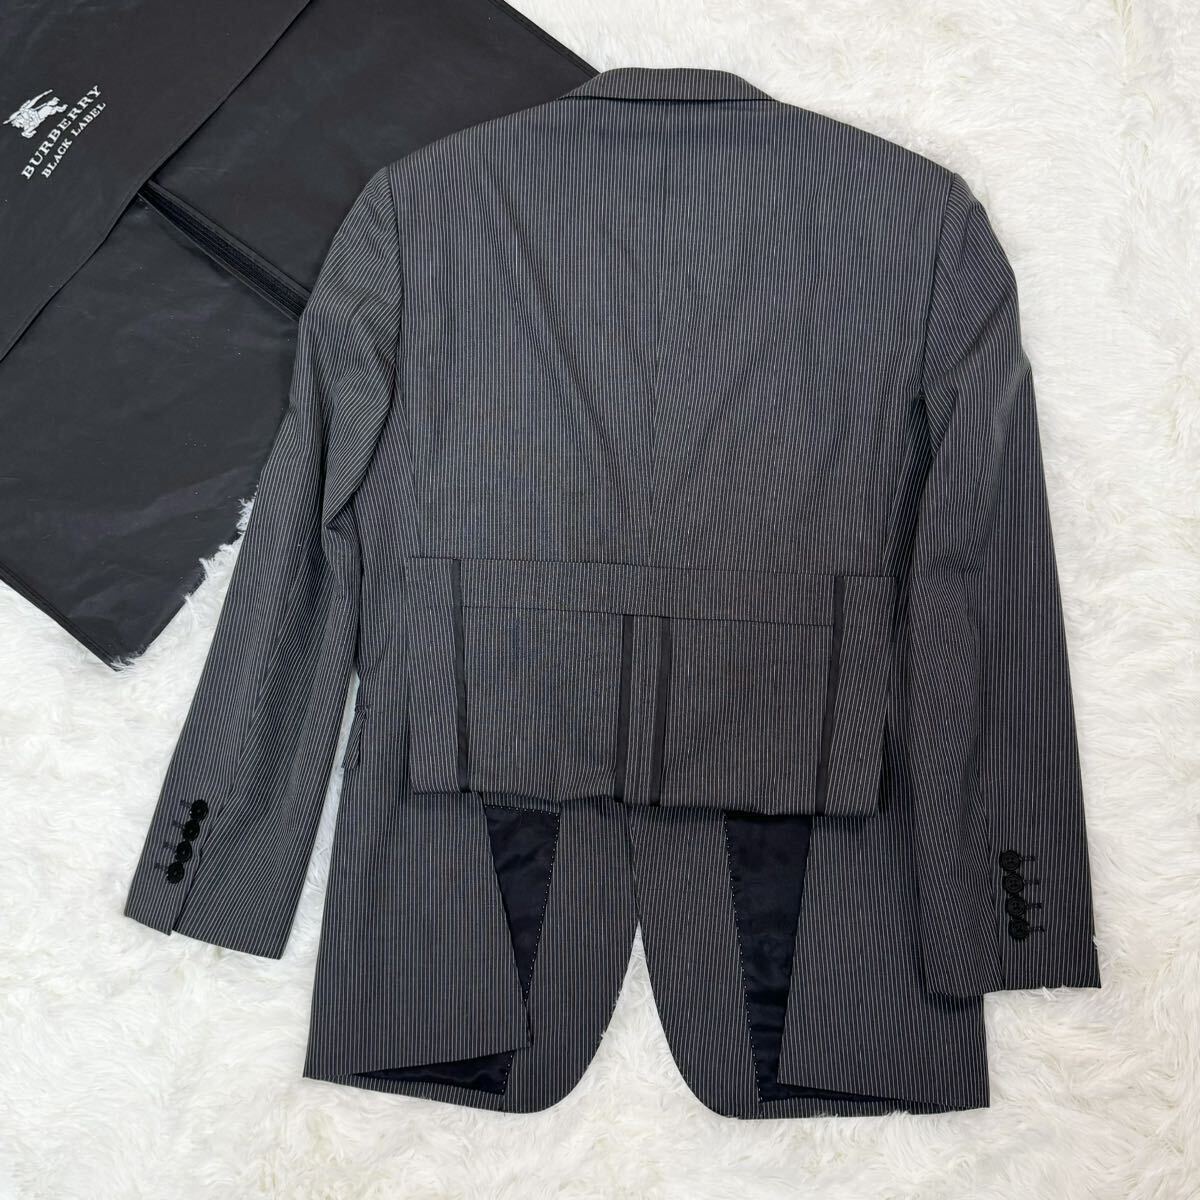  Burberry Black Label BURBERRY BLACK LABEL suit [ pressure volume. 3 piece ] charcoal gray 38R M corresponding stripe jacket through year 